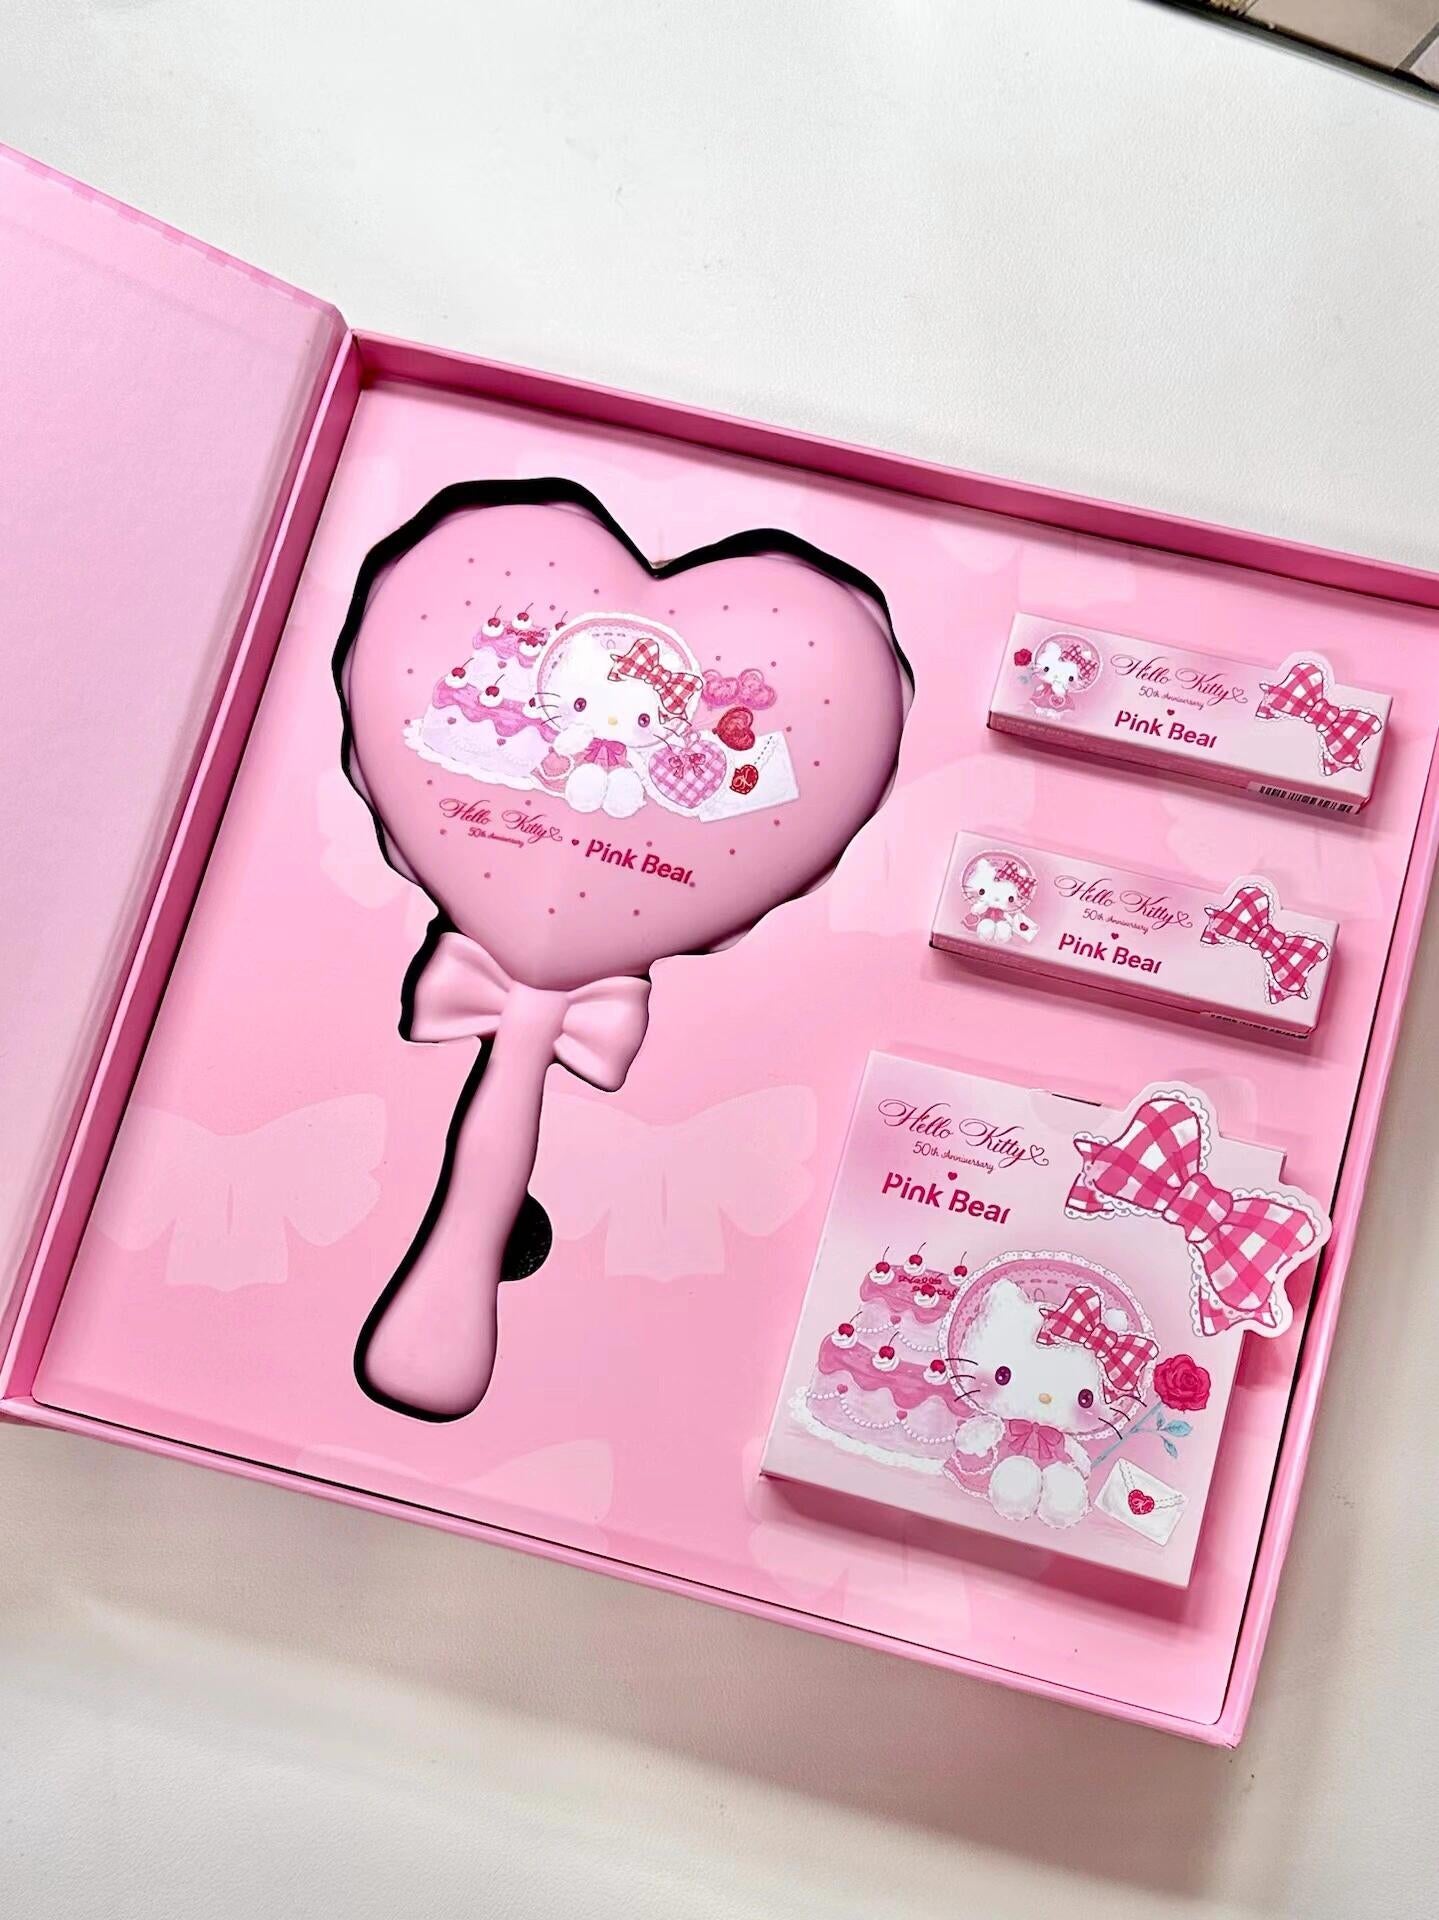 Hellokitty 50th Anniversary Co-branded Makeup Gift Set Includes 2 lipsticks/Eyeshadows/Makeup mirror